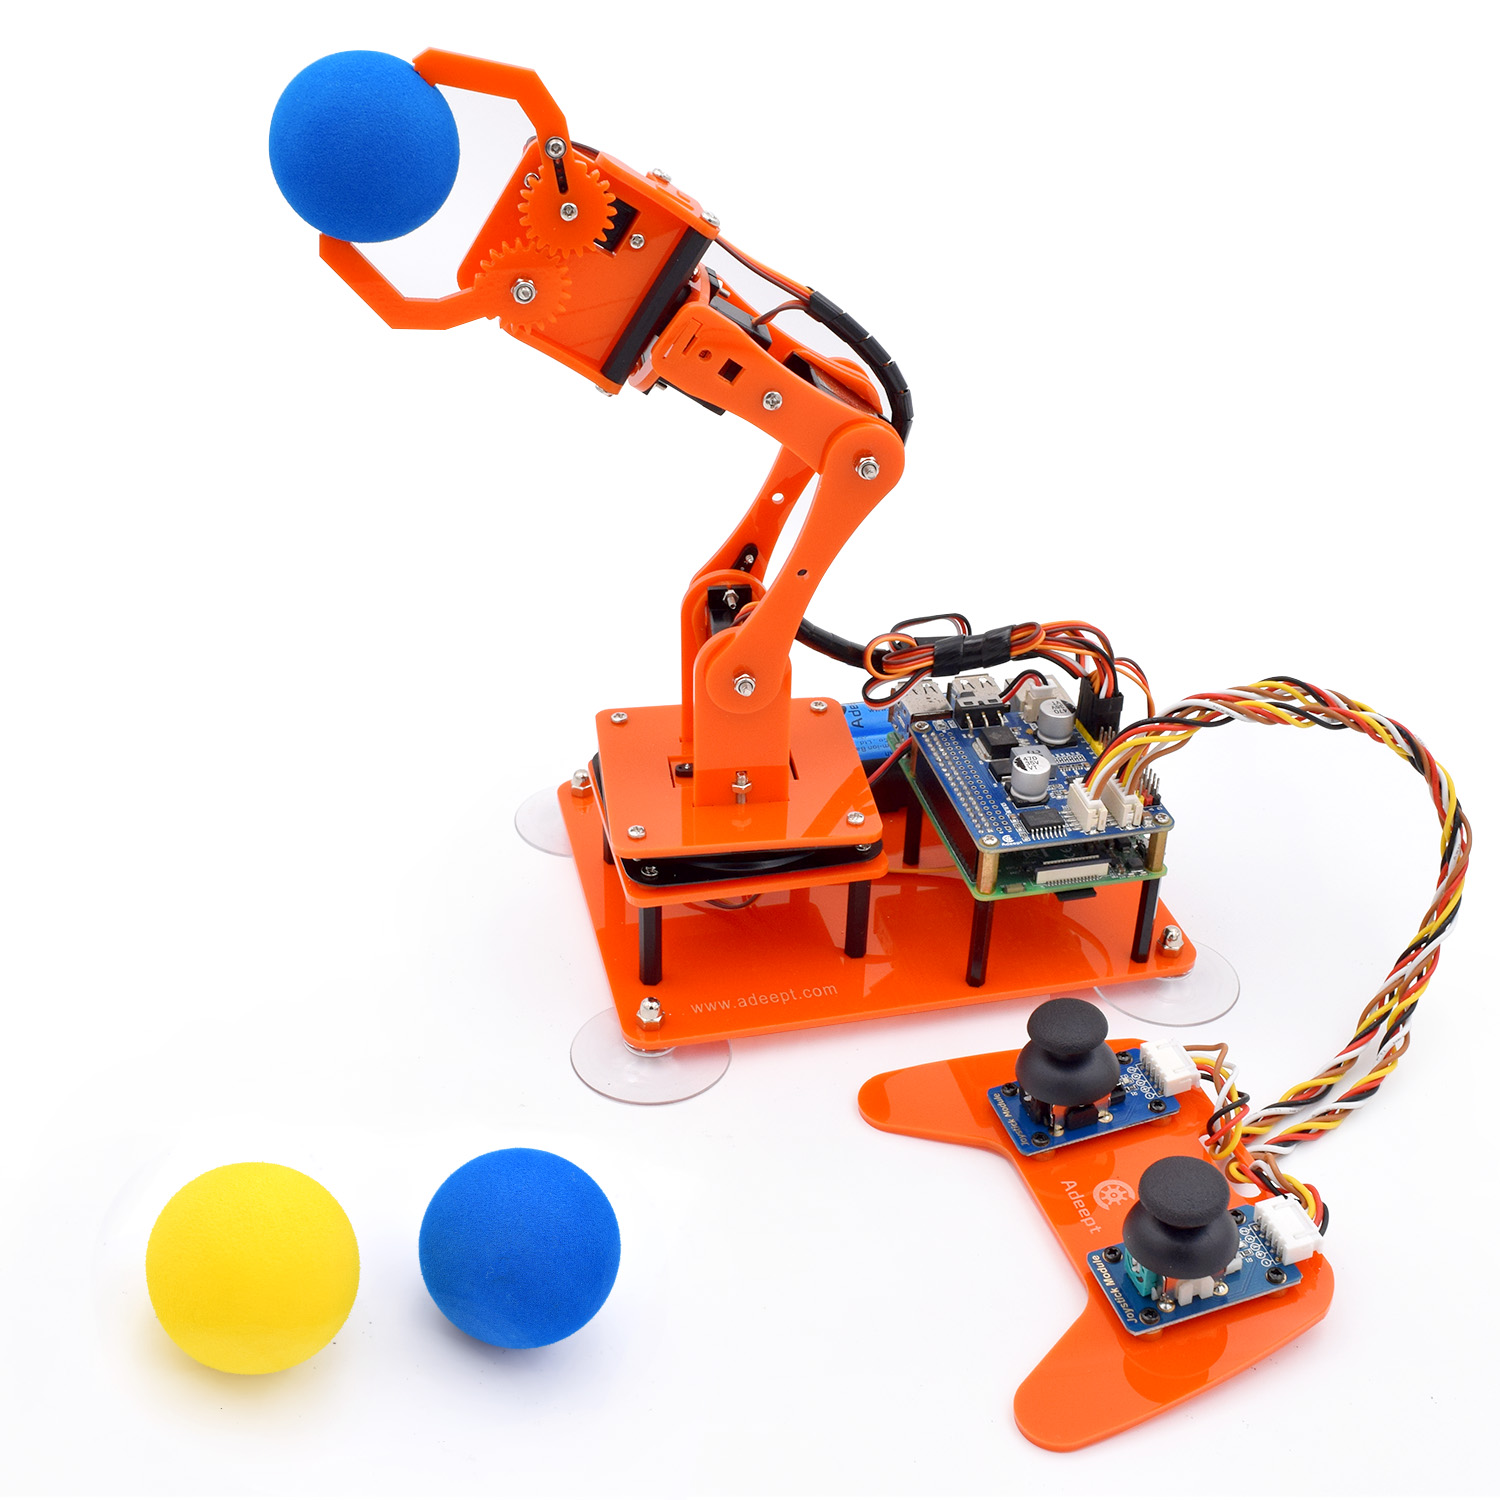 Adeept 5-DOF Robotic Arm Kit for Raspberry Pi 4 B 3 B+ B A+, Programmable DIY Coding STEM Educational 5 Axis Robot Arm with Python Code and Tutorials